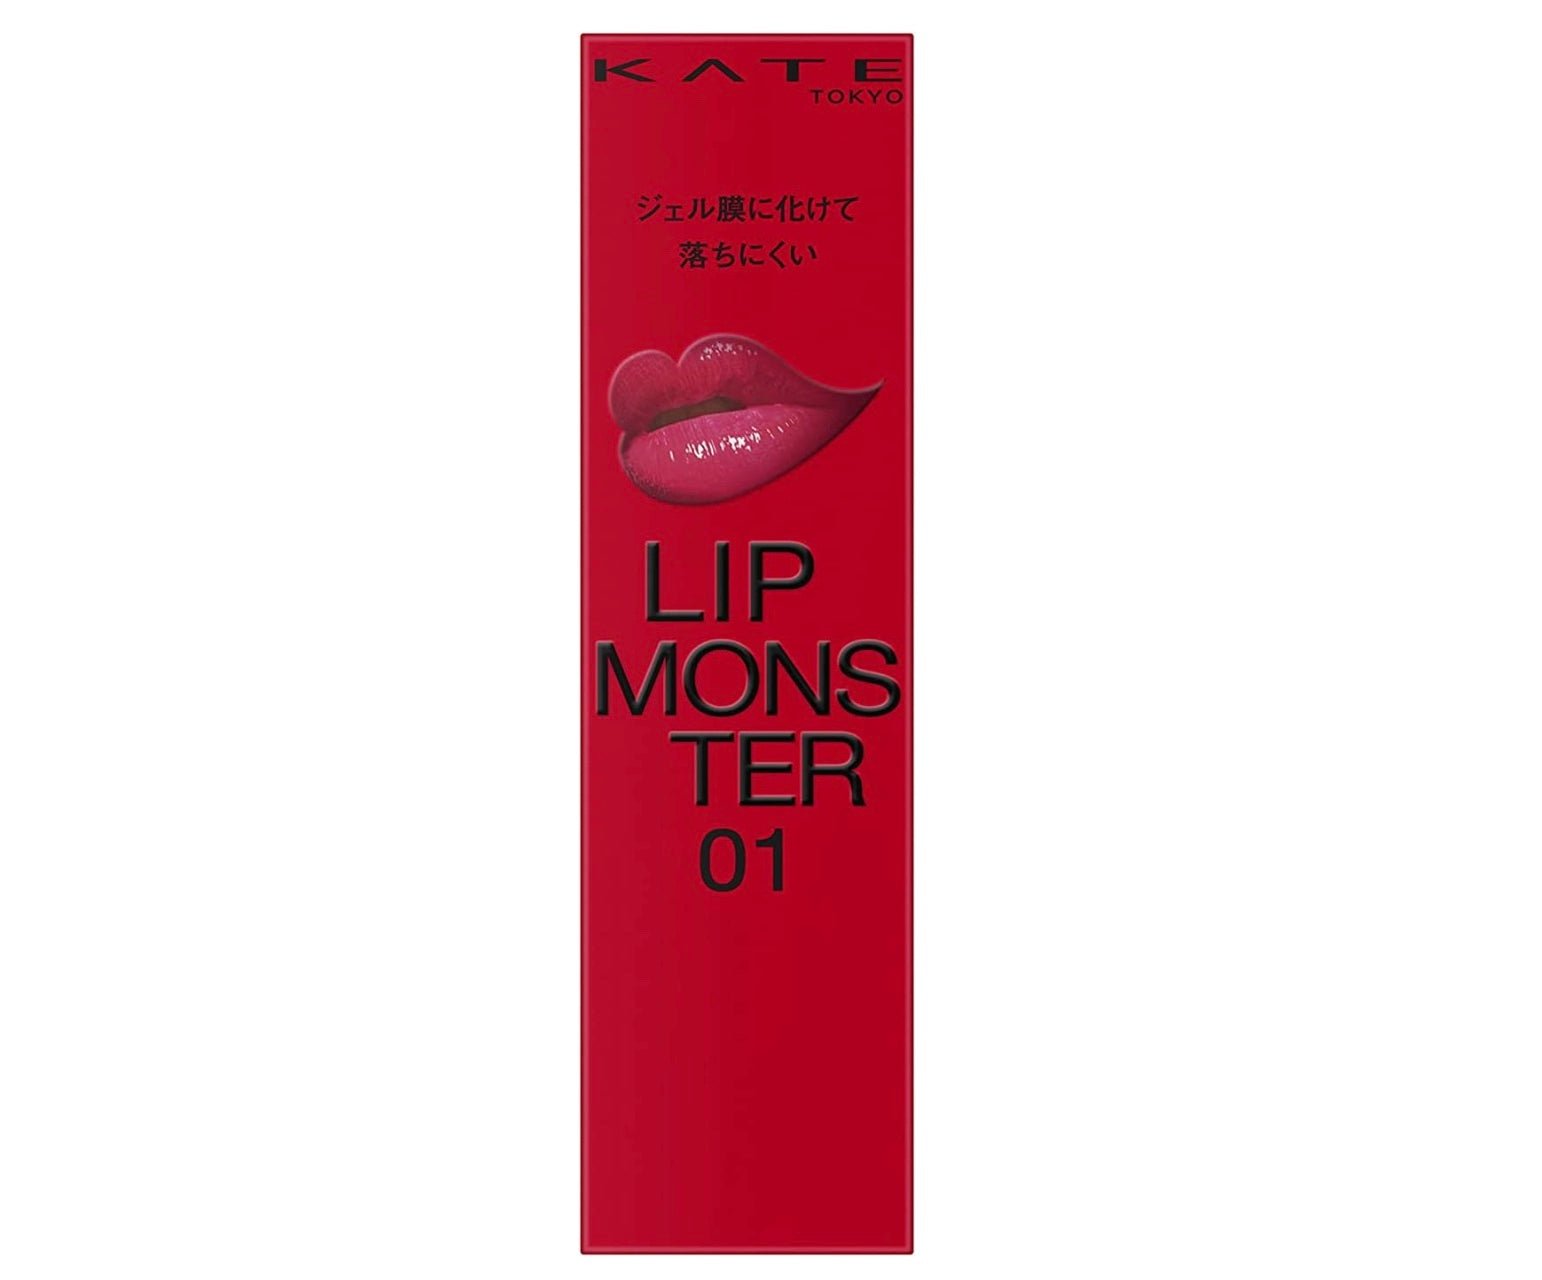 Kate Lip Monster - Ichiban Mart